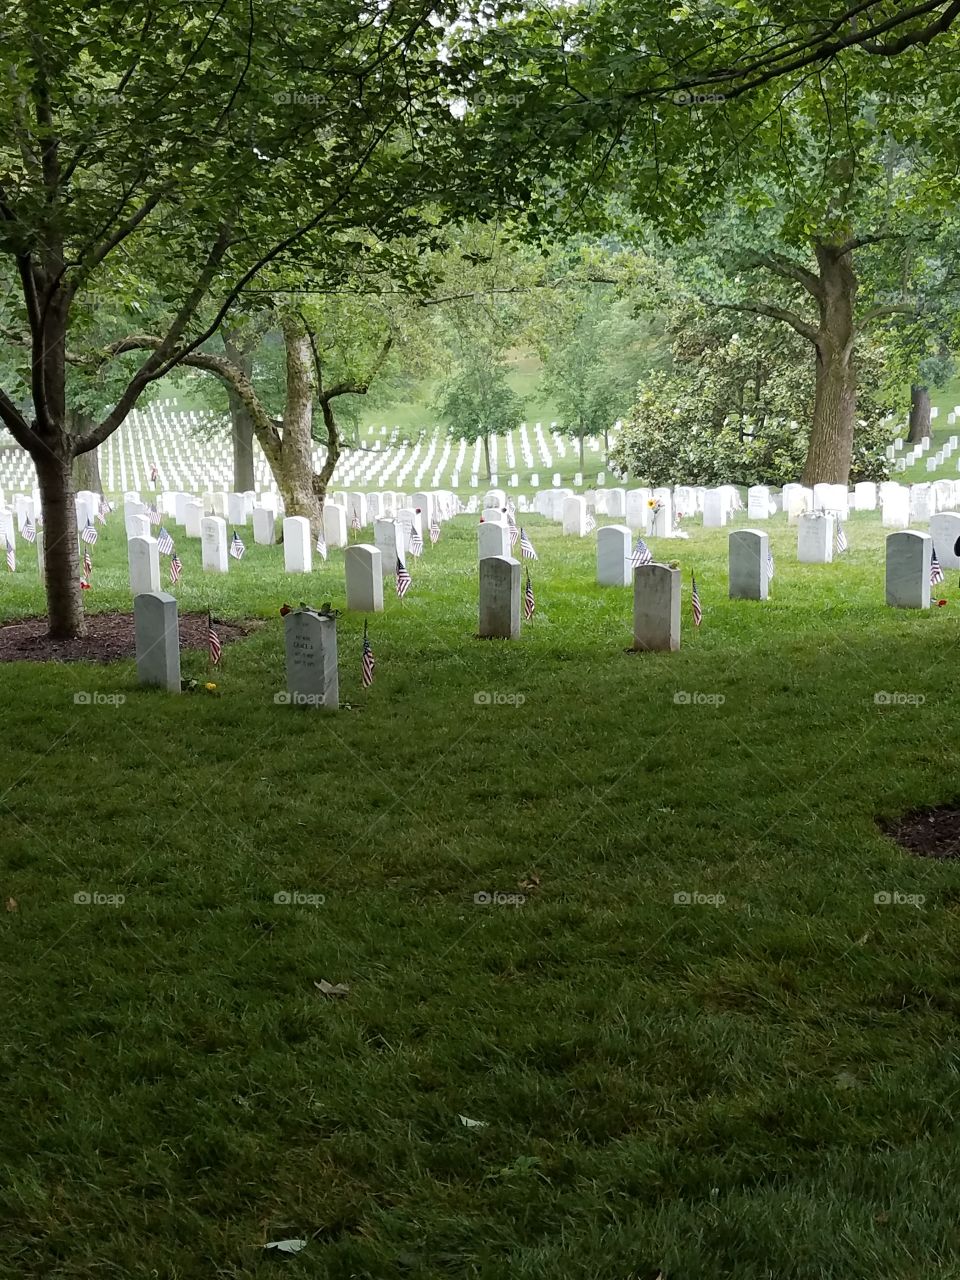 Arlington national cemetery in Washington D.C.